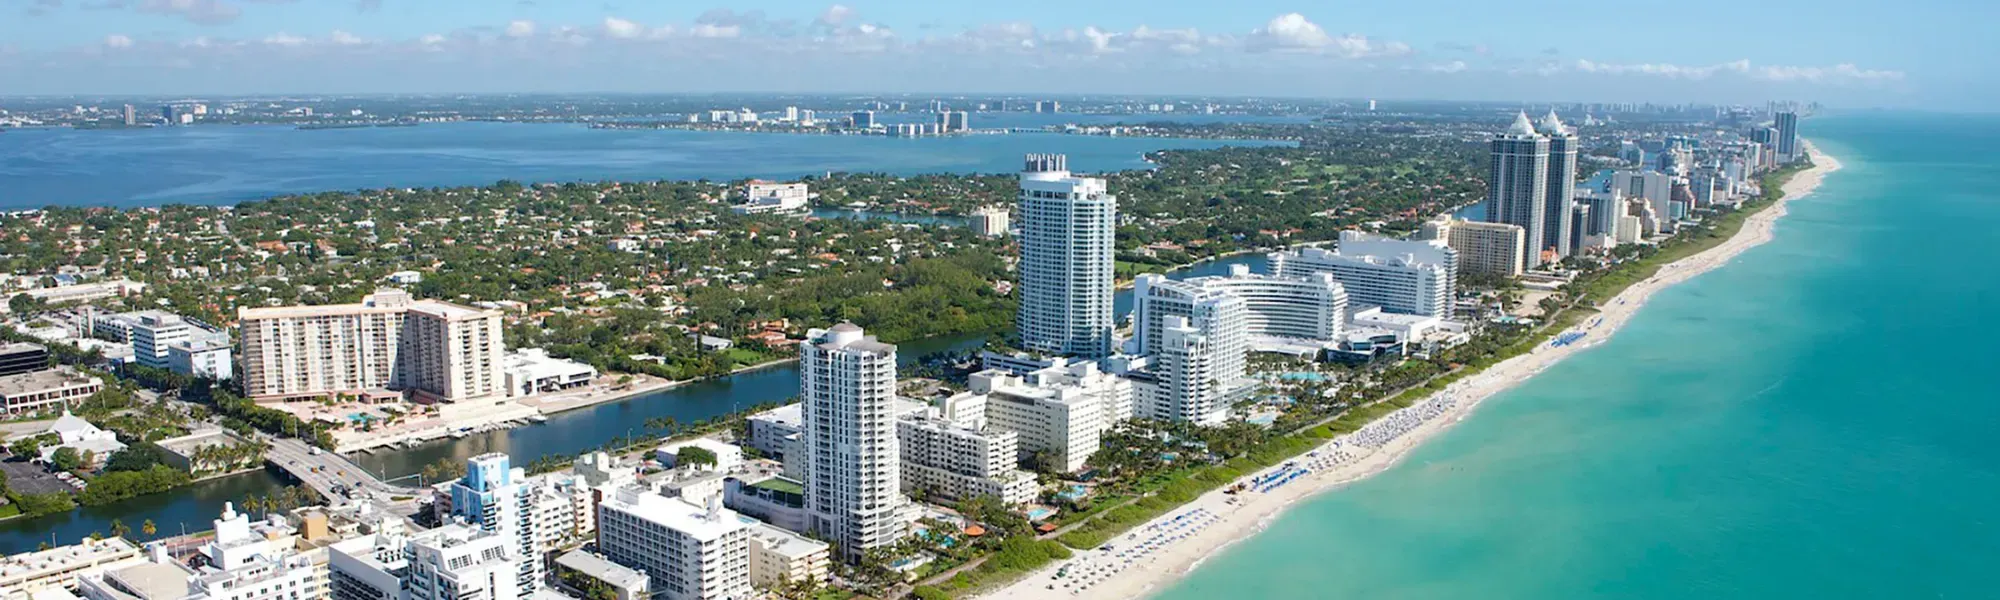 Miami aerial photo